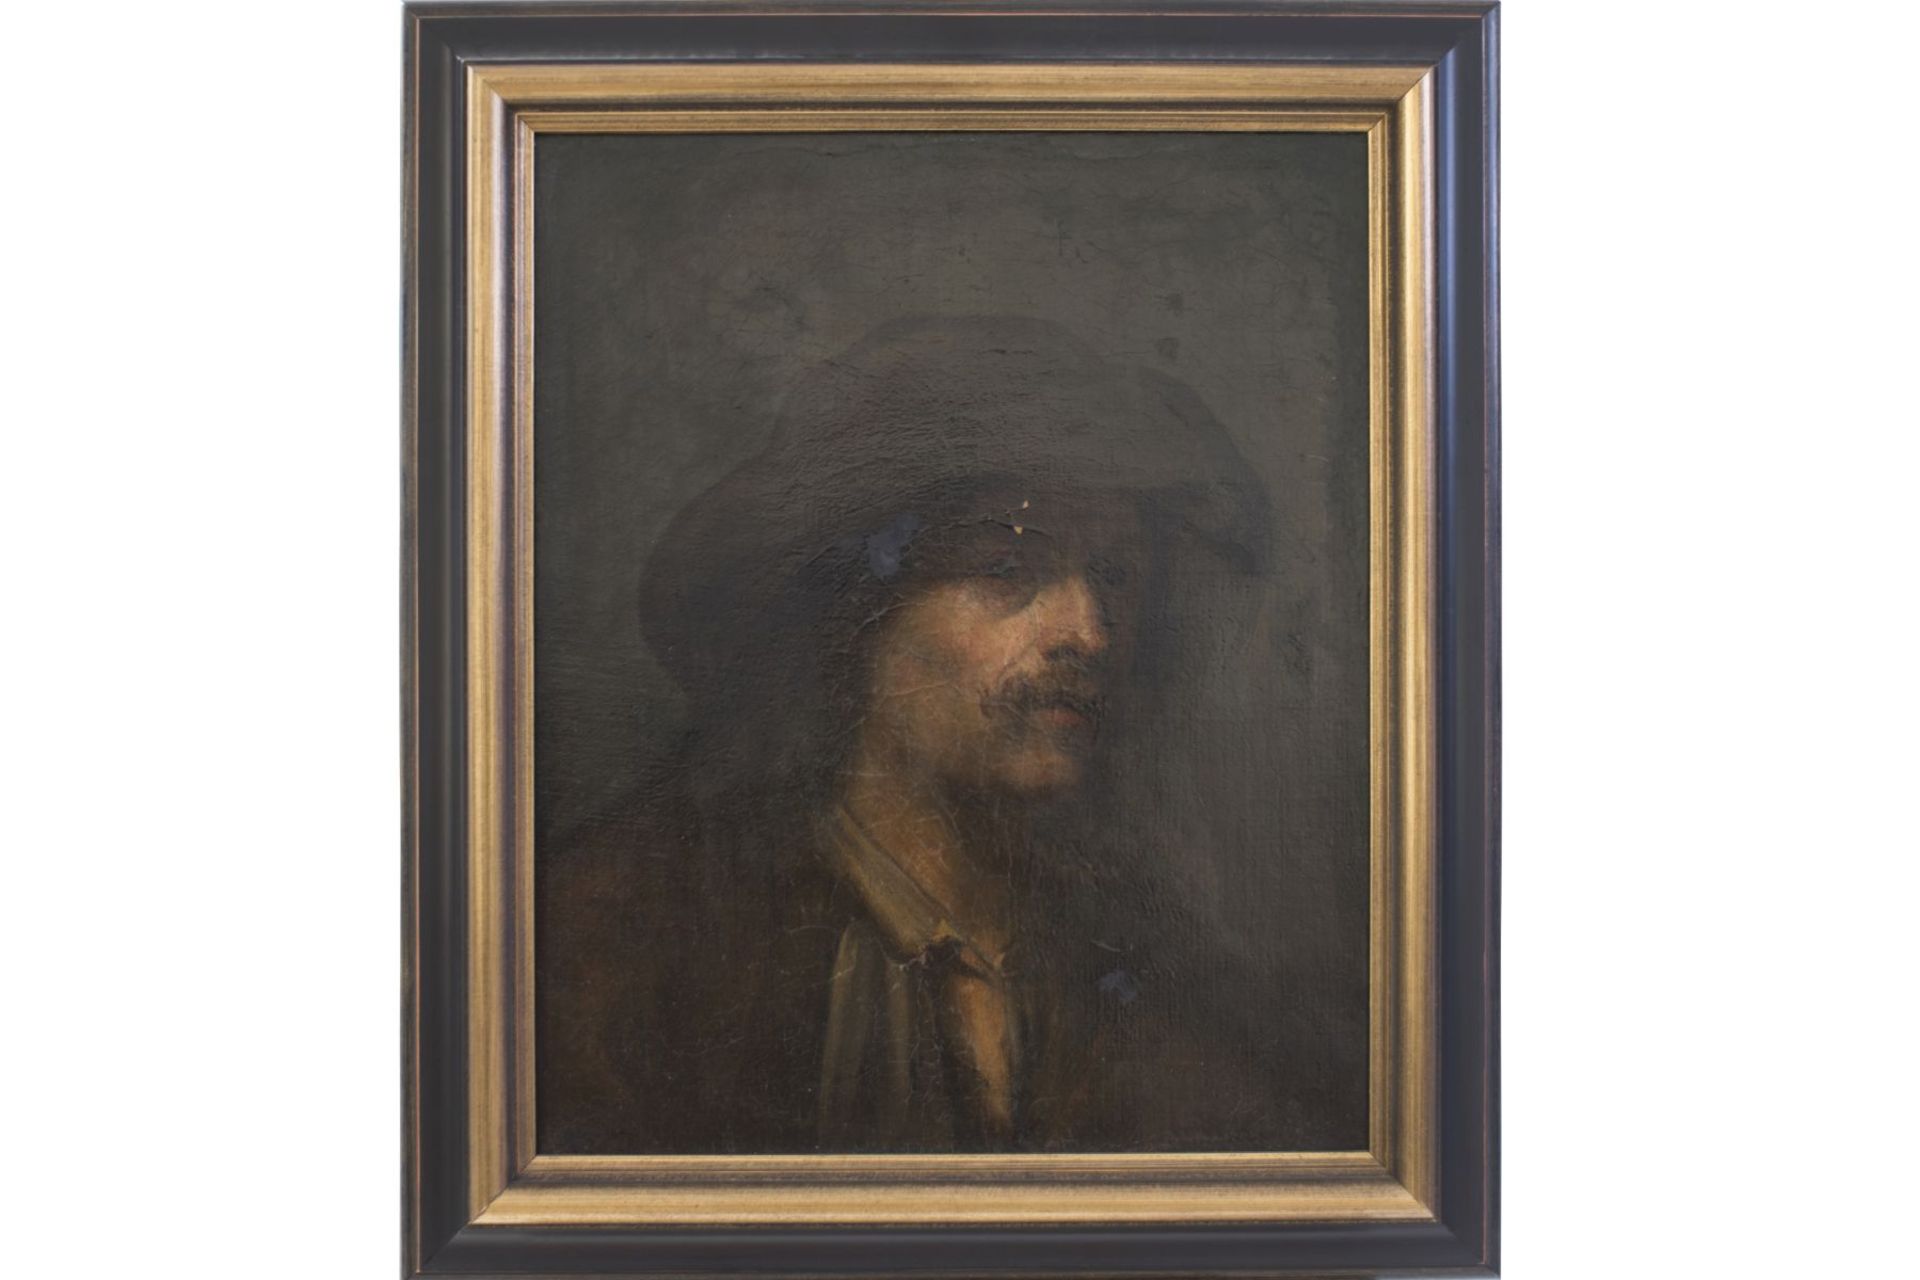 Attributed to Mihály von Munkácsy (1844-1900) "Bearded man with floppy hat"